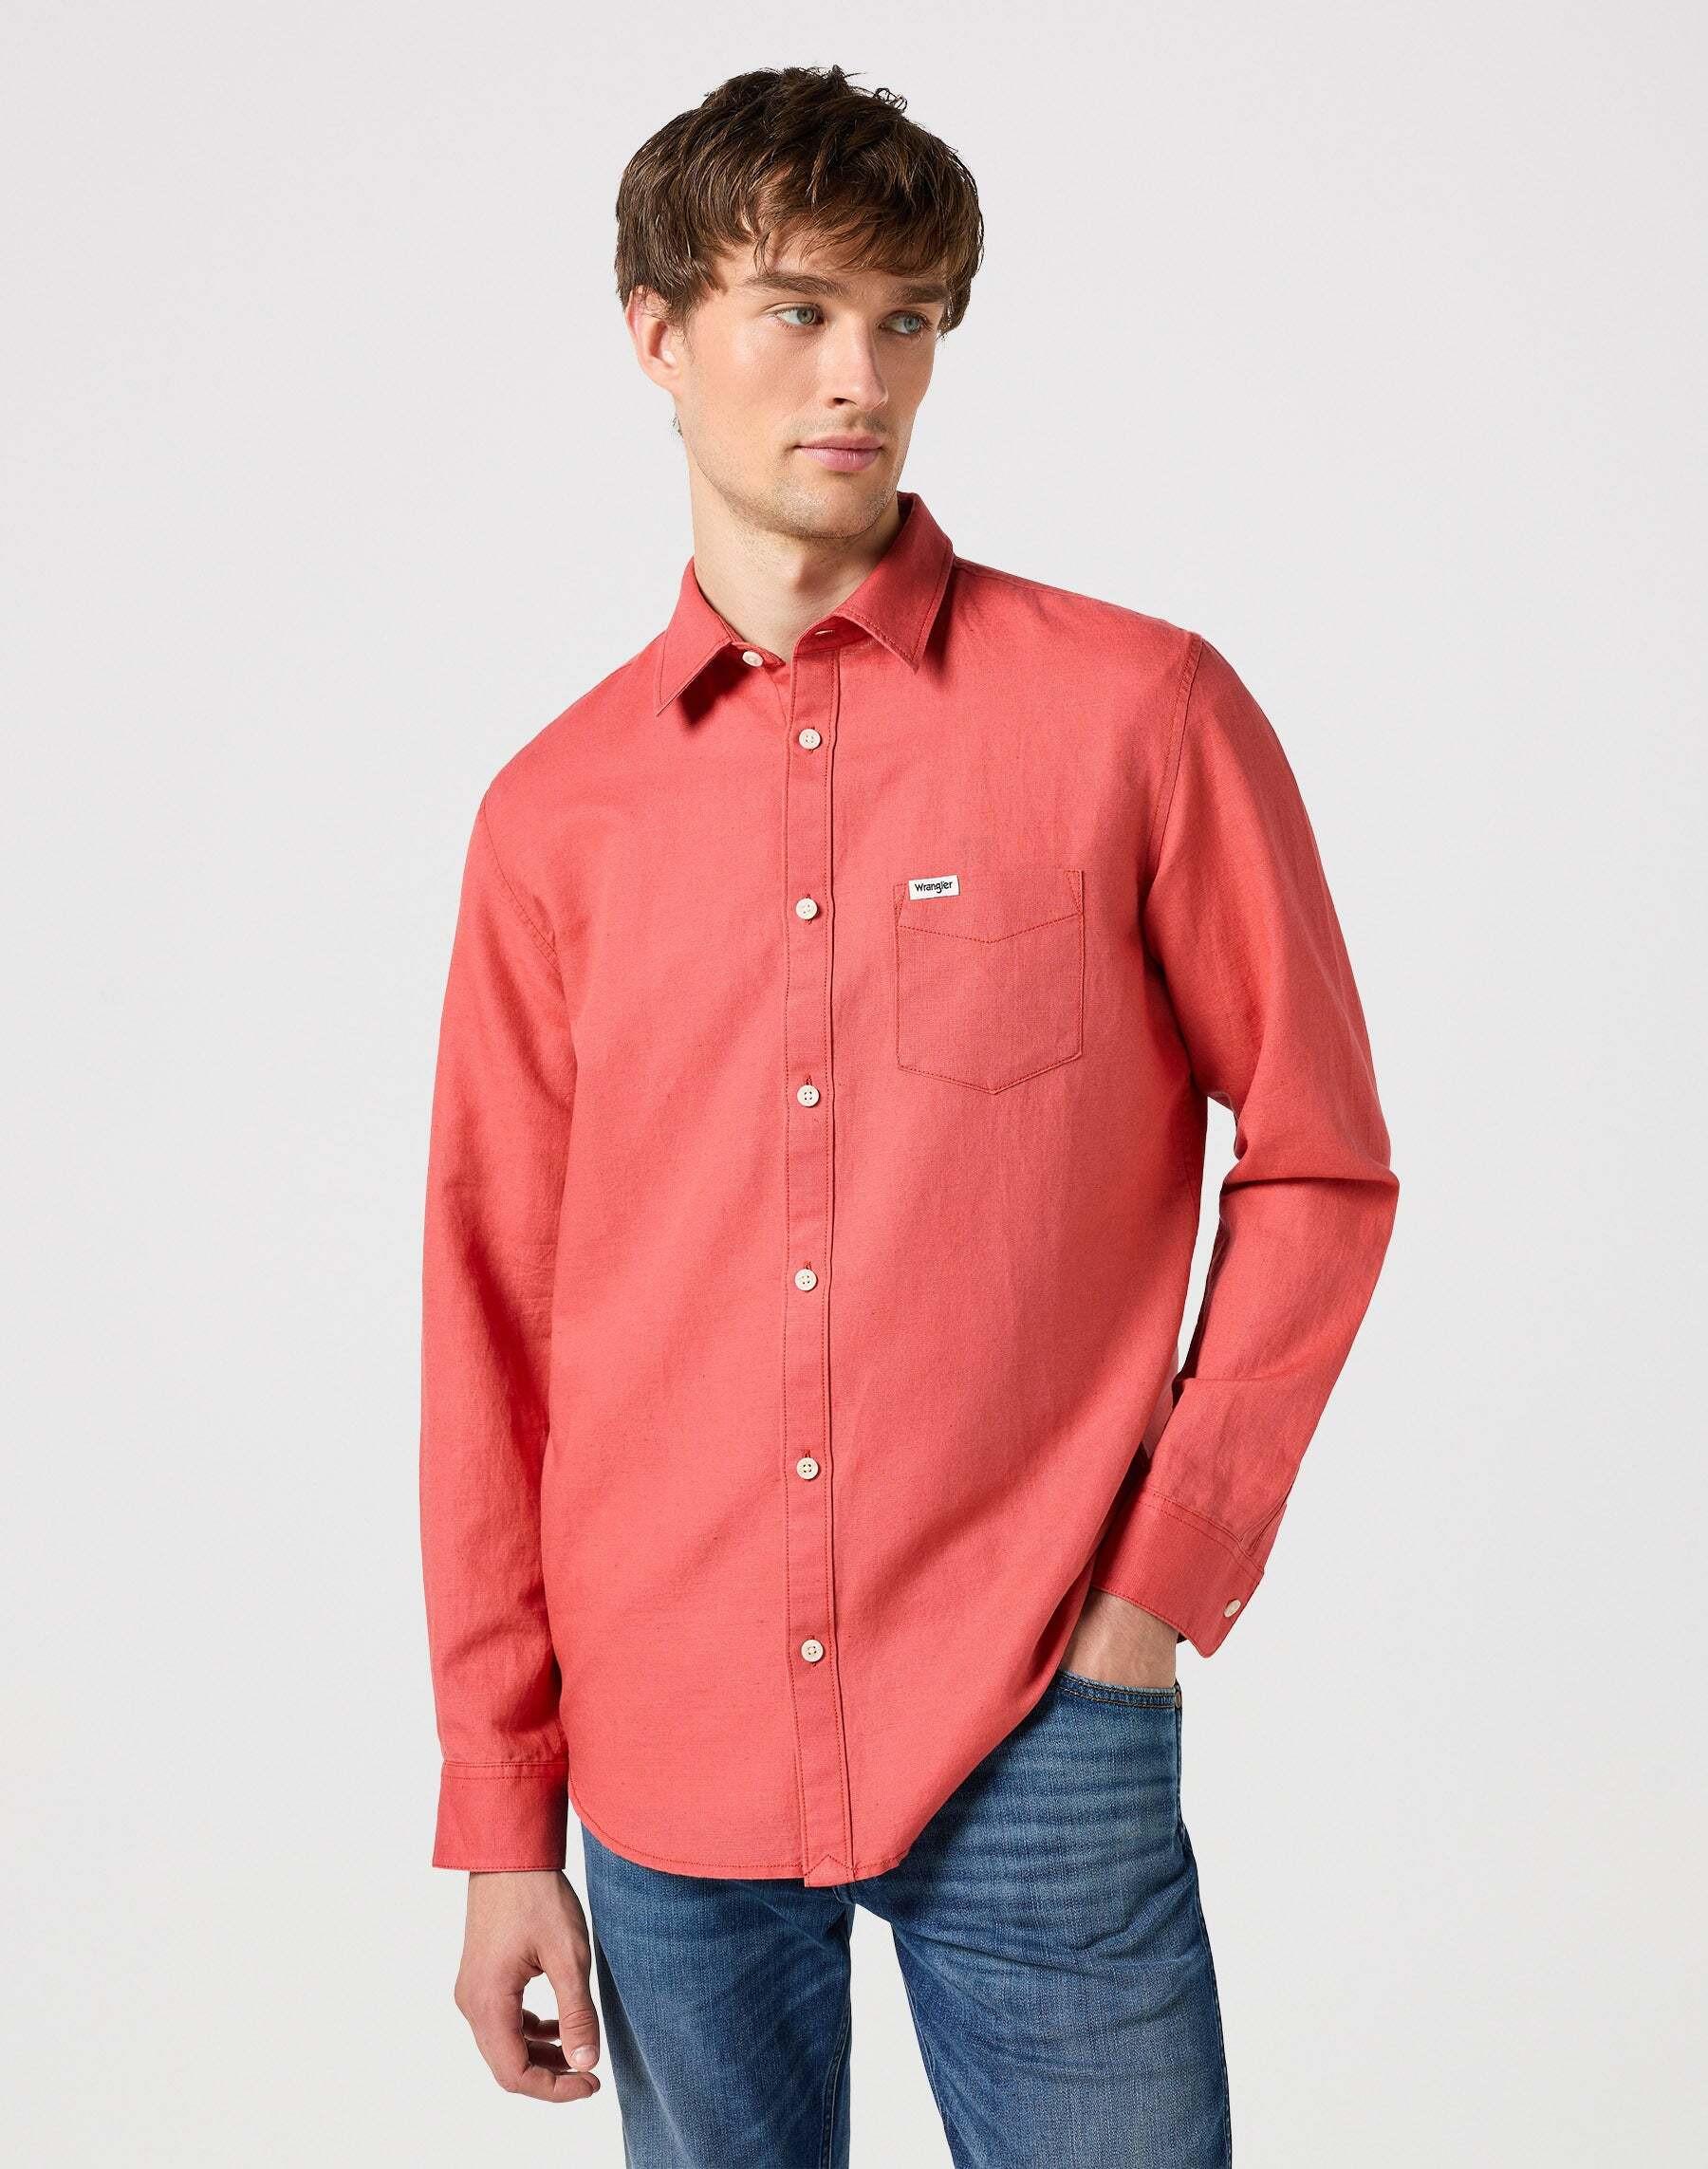 Hemden One Pocket Shirt Herren Orange L von Wrangler